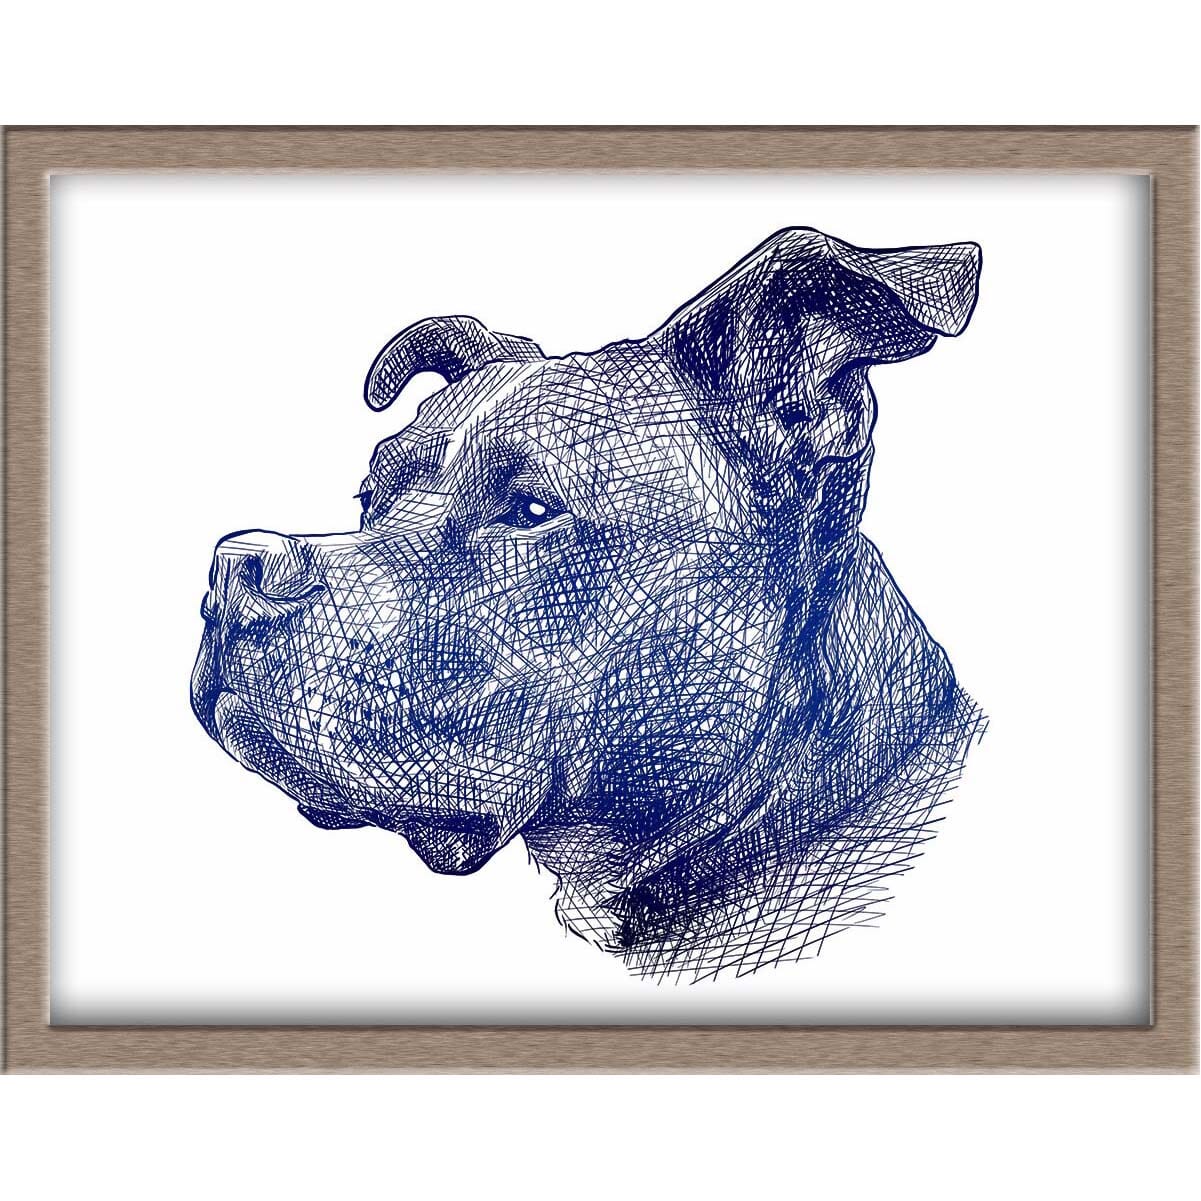 Pitbull Dog Portrait Foiled Print (Max) Posters, Prints, & Visual Artwork JoyousJoyfulJoyness 